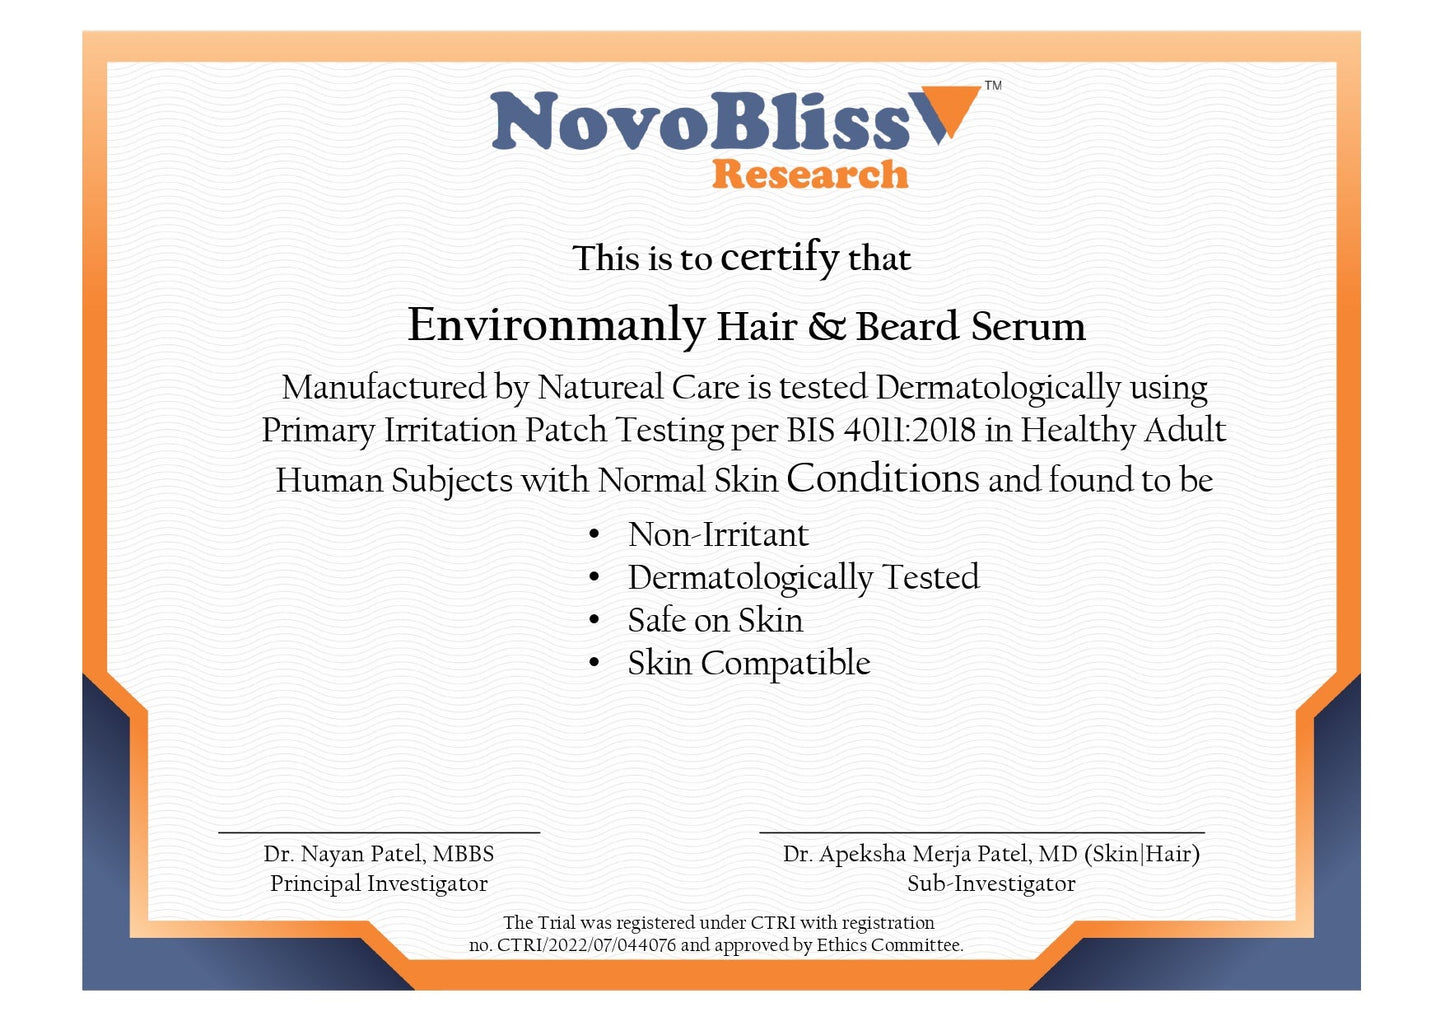 Hair & Beard Serum - Environmanly